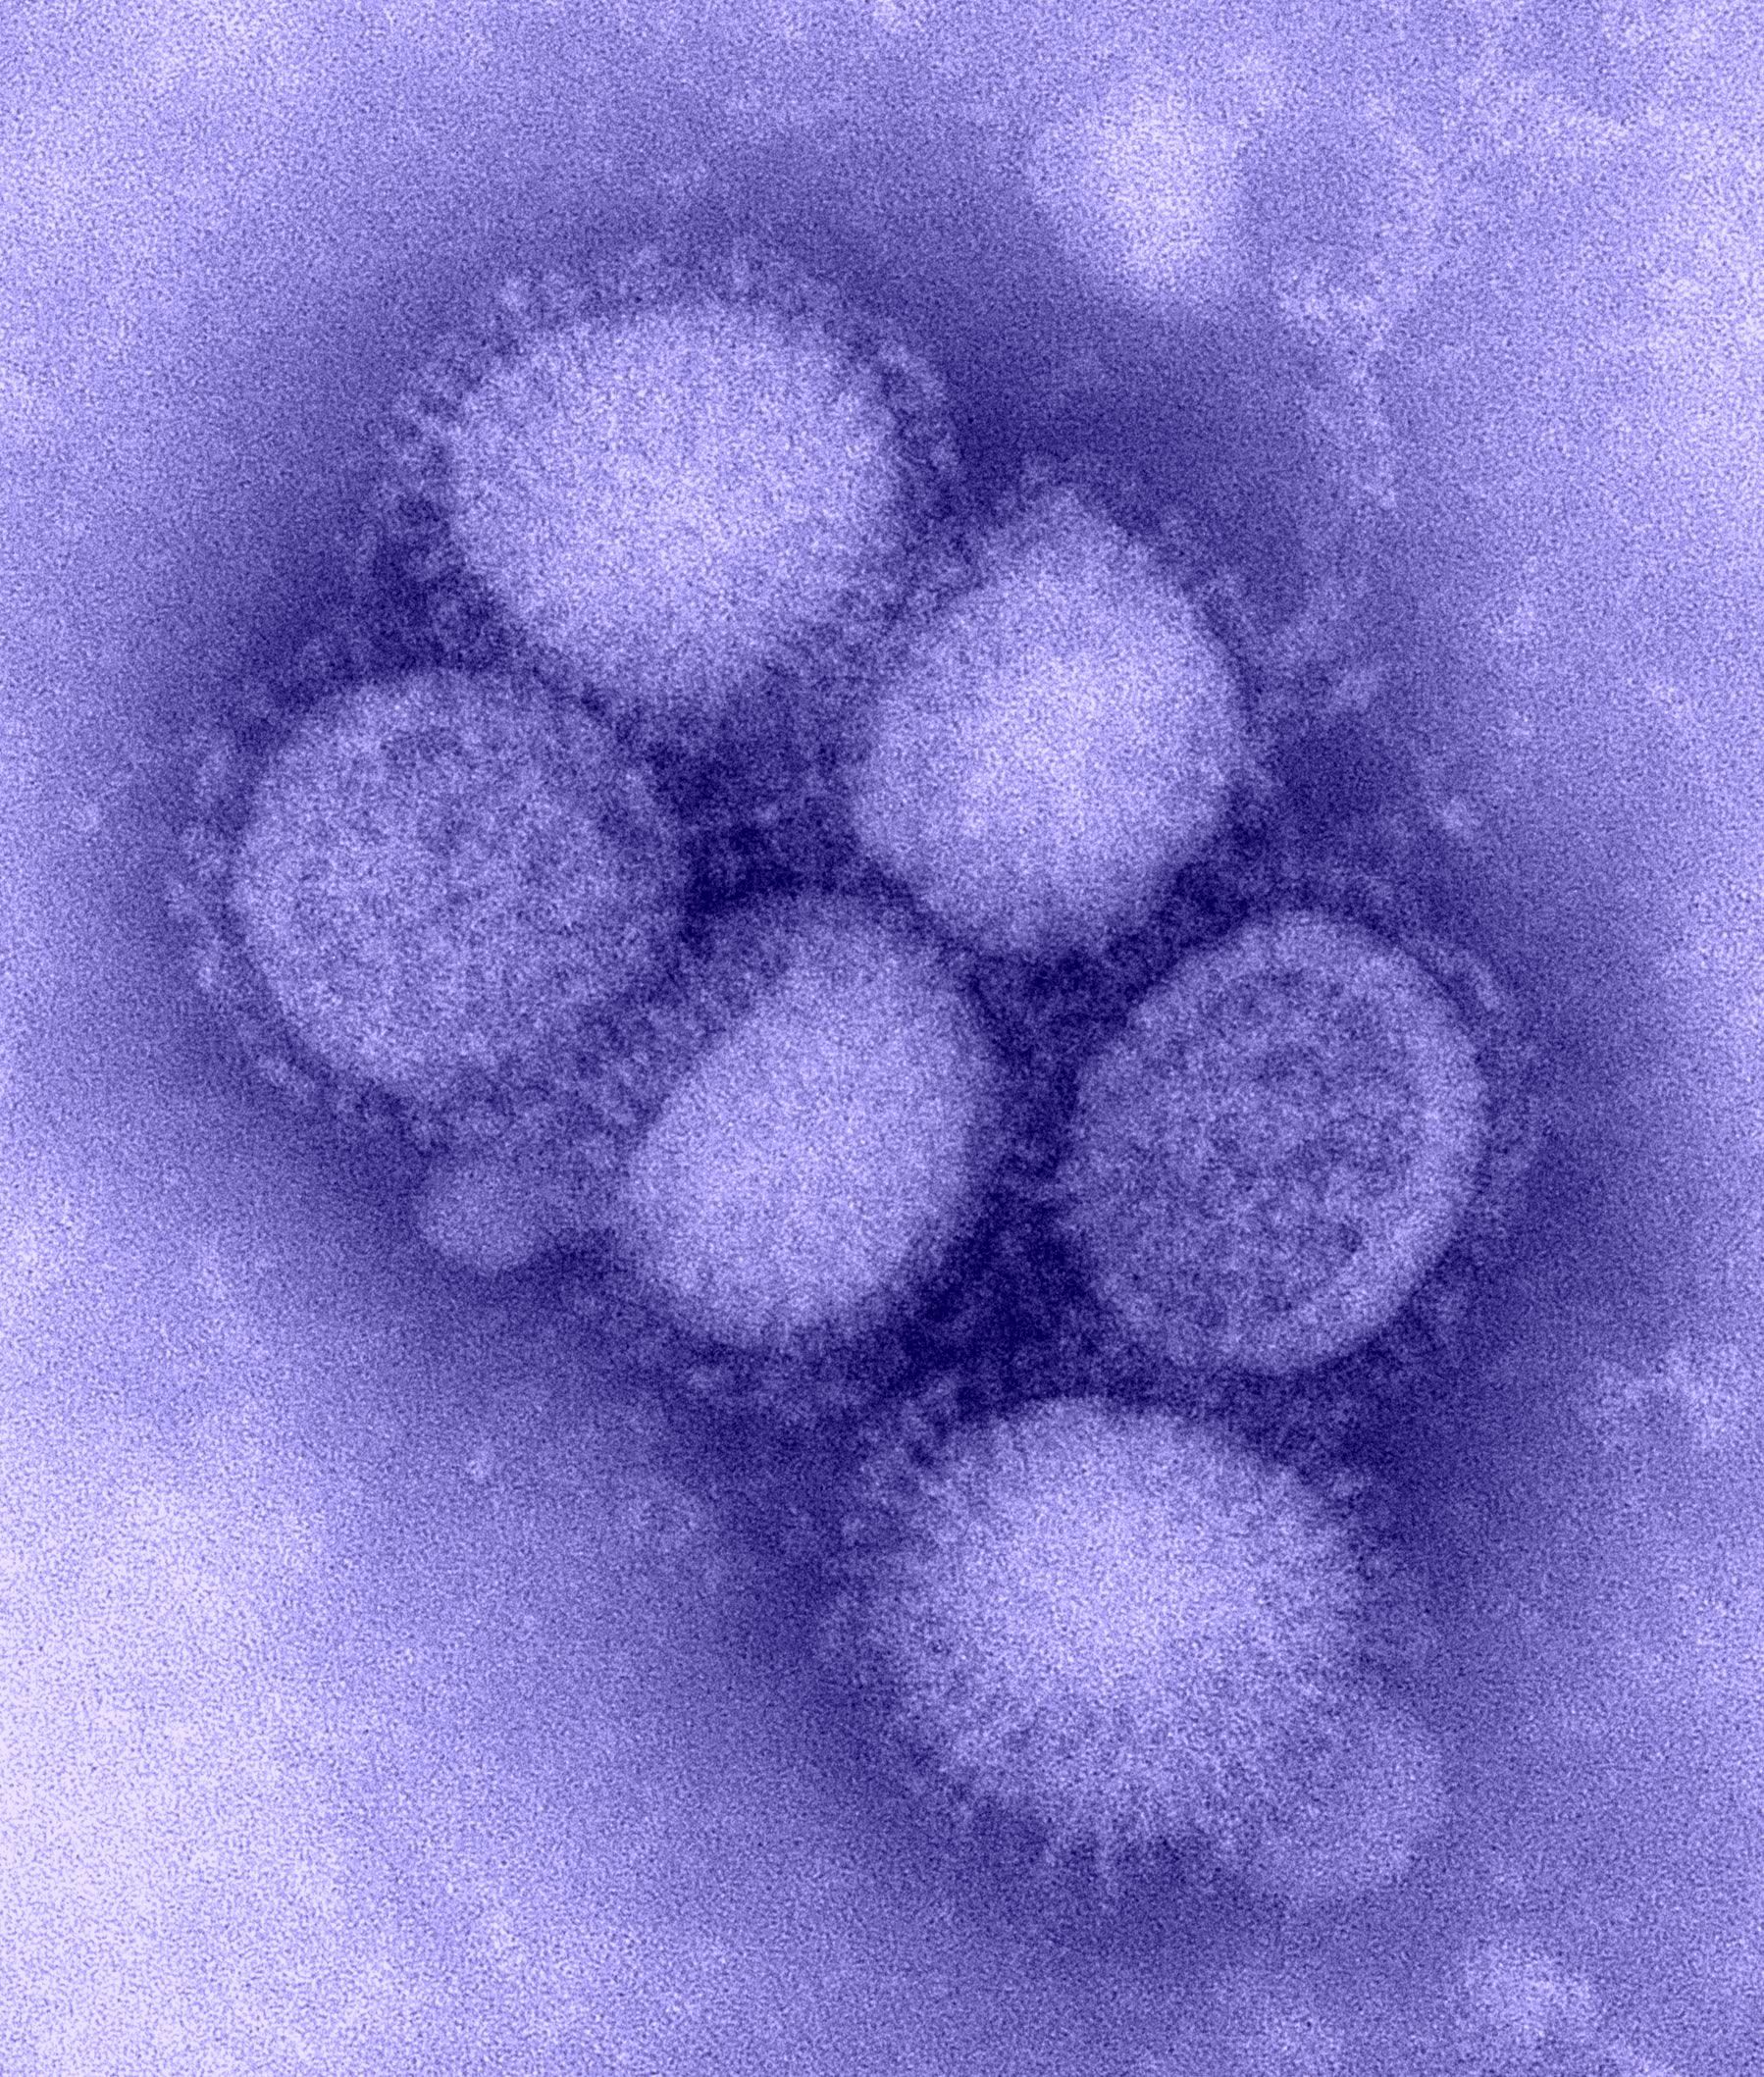 H1N1 Flu of 2009 in Canada. The Canadian Encyclopedia